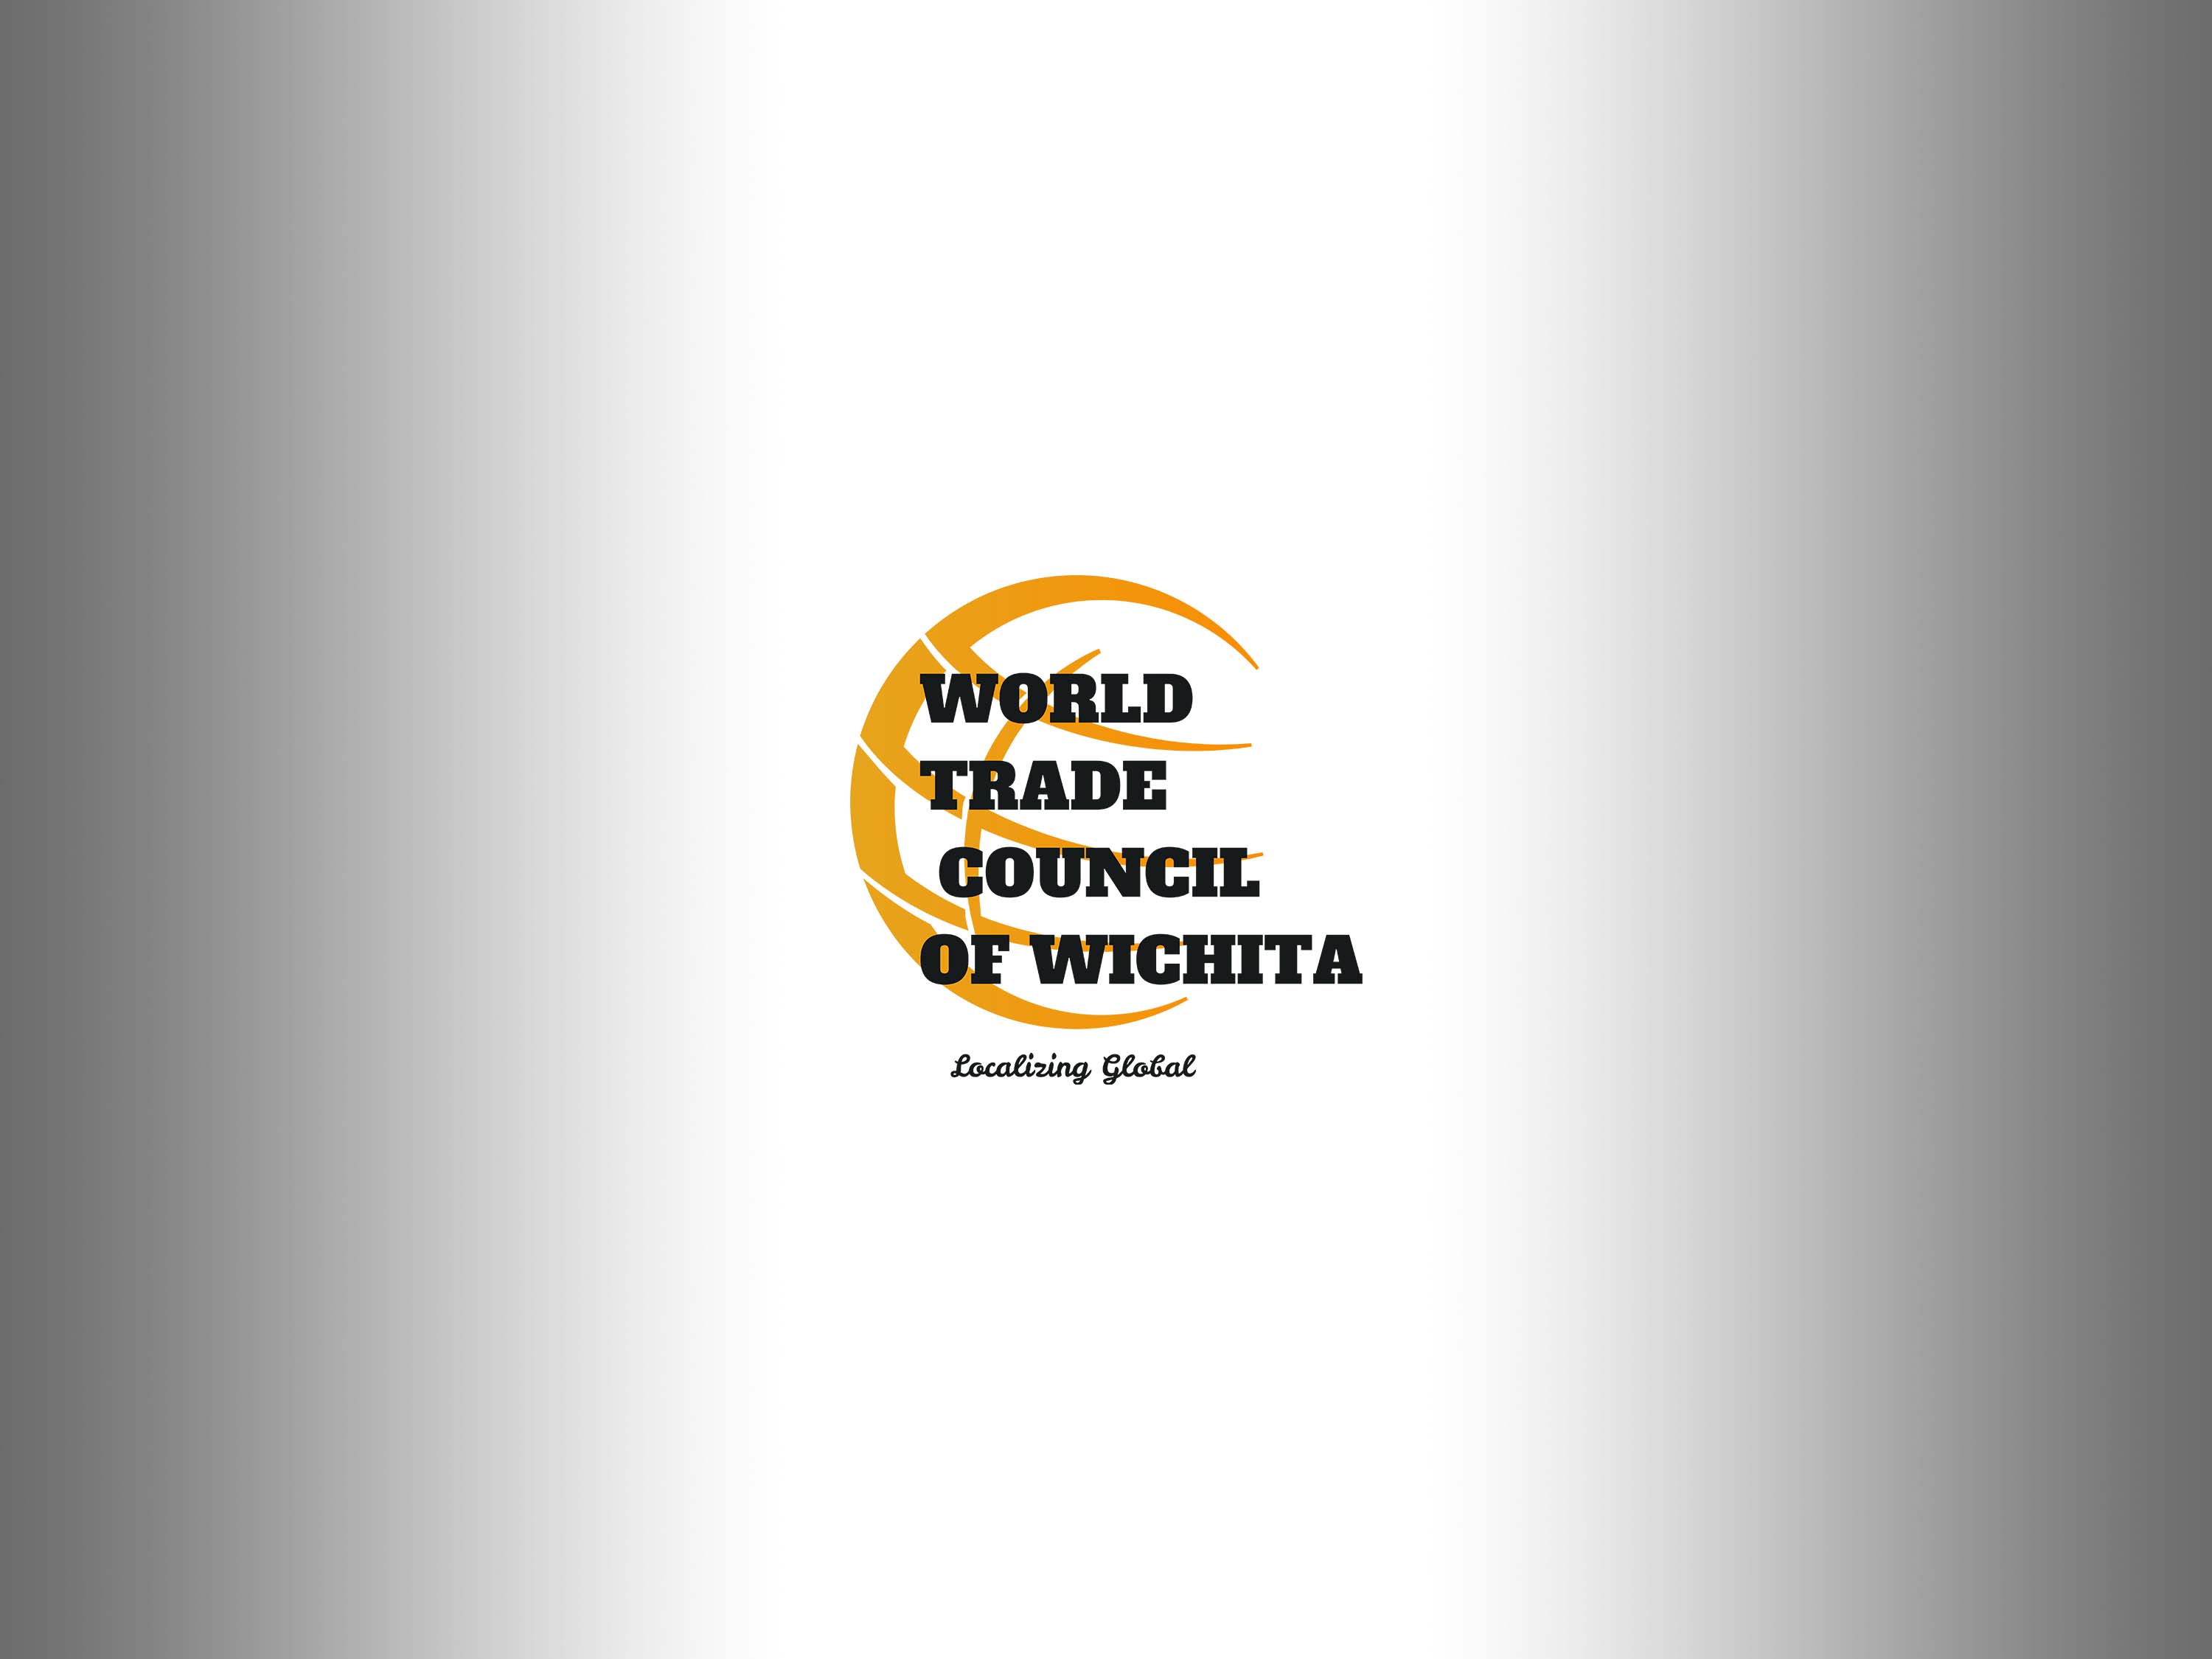 World Trade Council of Wichita Logo - "Localizing Global"